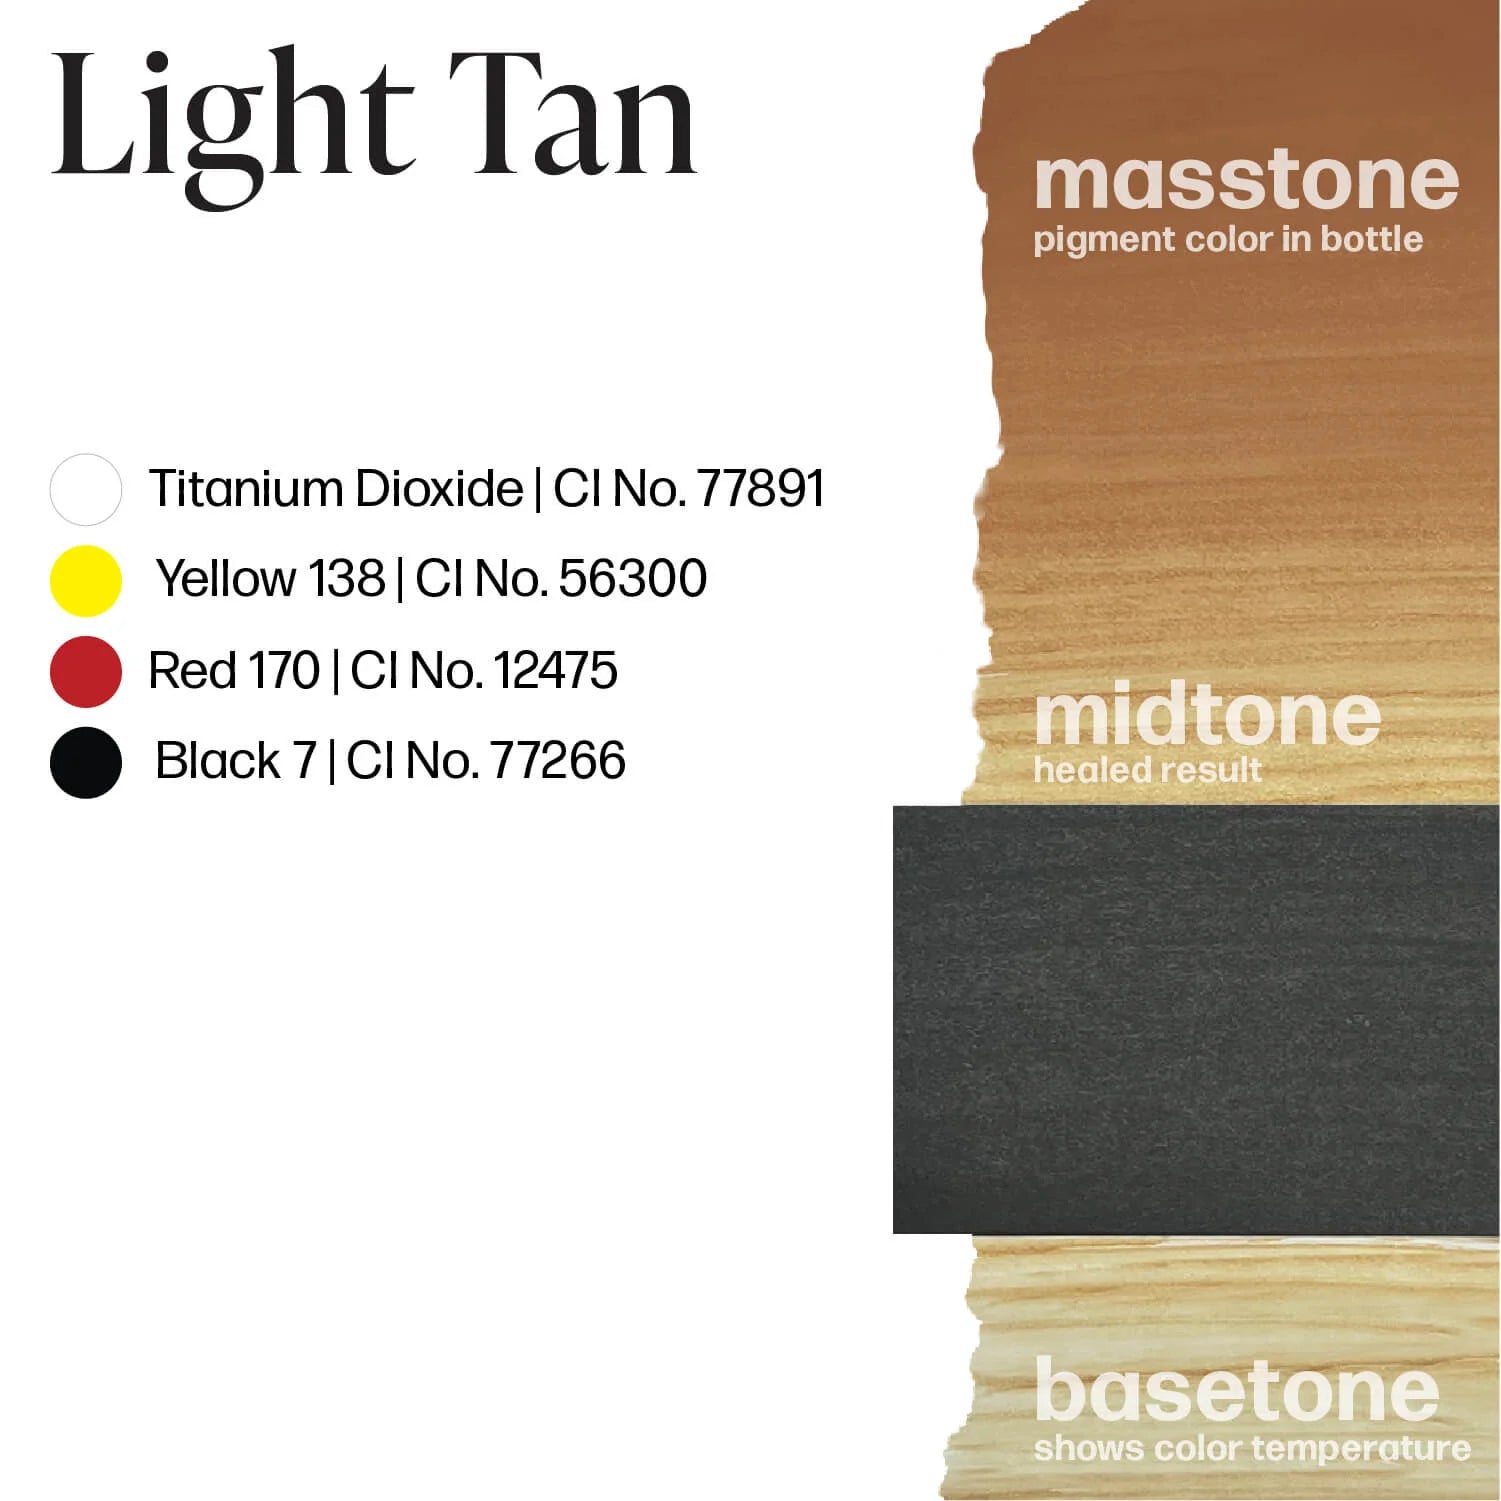 Perma Blend Luxe - Light Tan